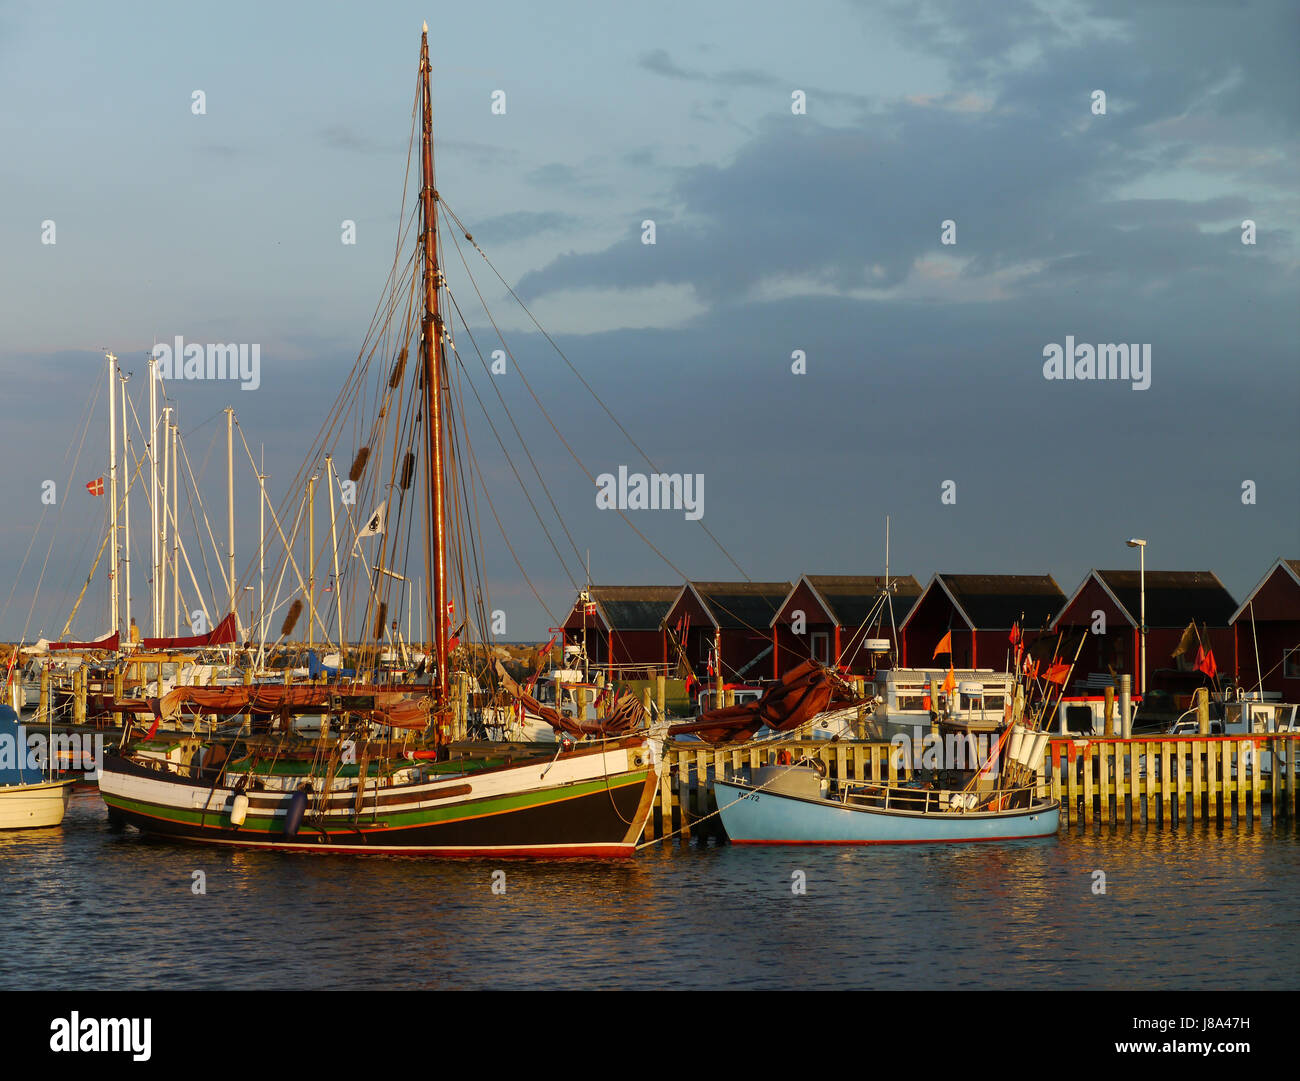 Dinamarca, veleros, barcos de pesca, vela, Dinamarca, el agua, el mar Báltico, la sal Foto de stock